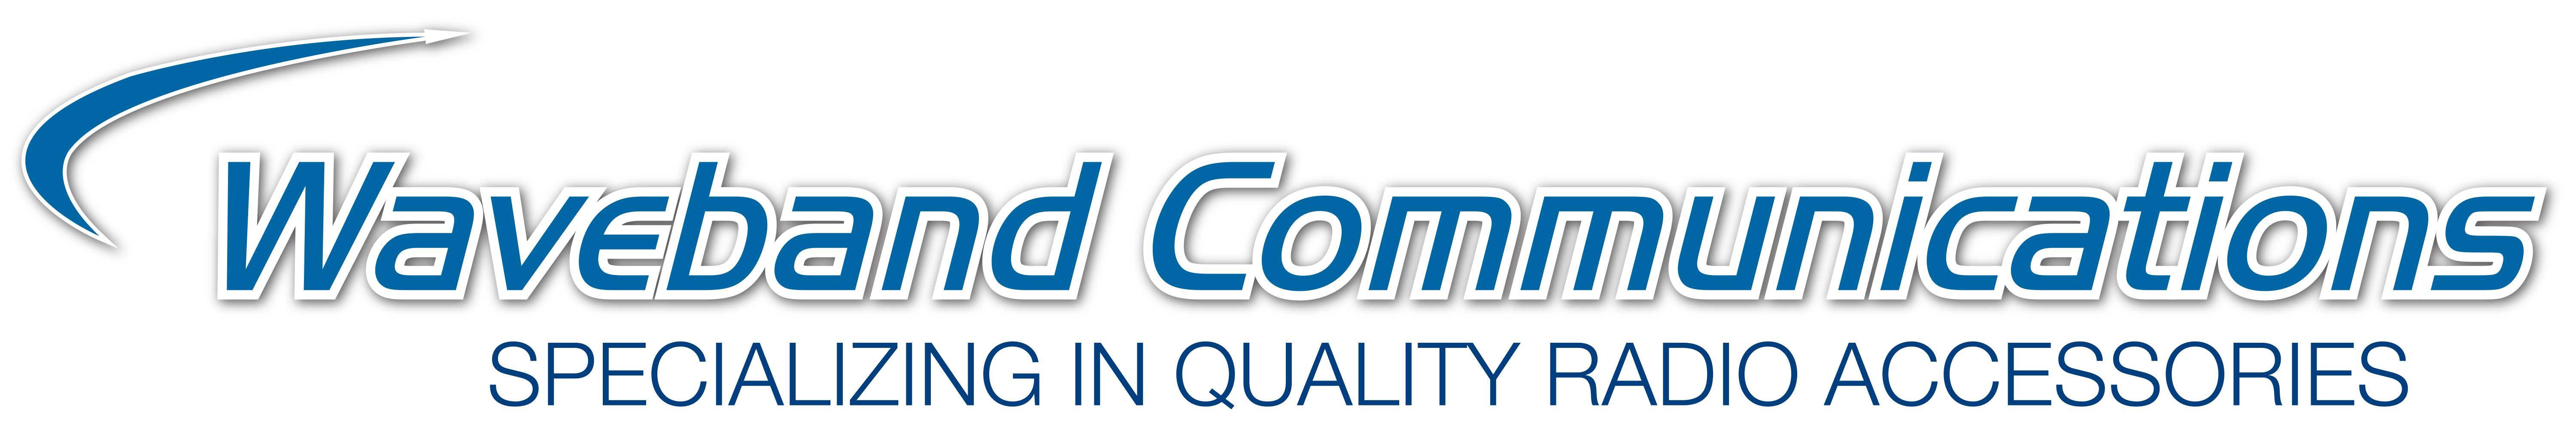 wvbandcoms-logo-1